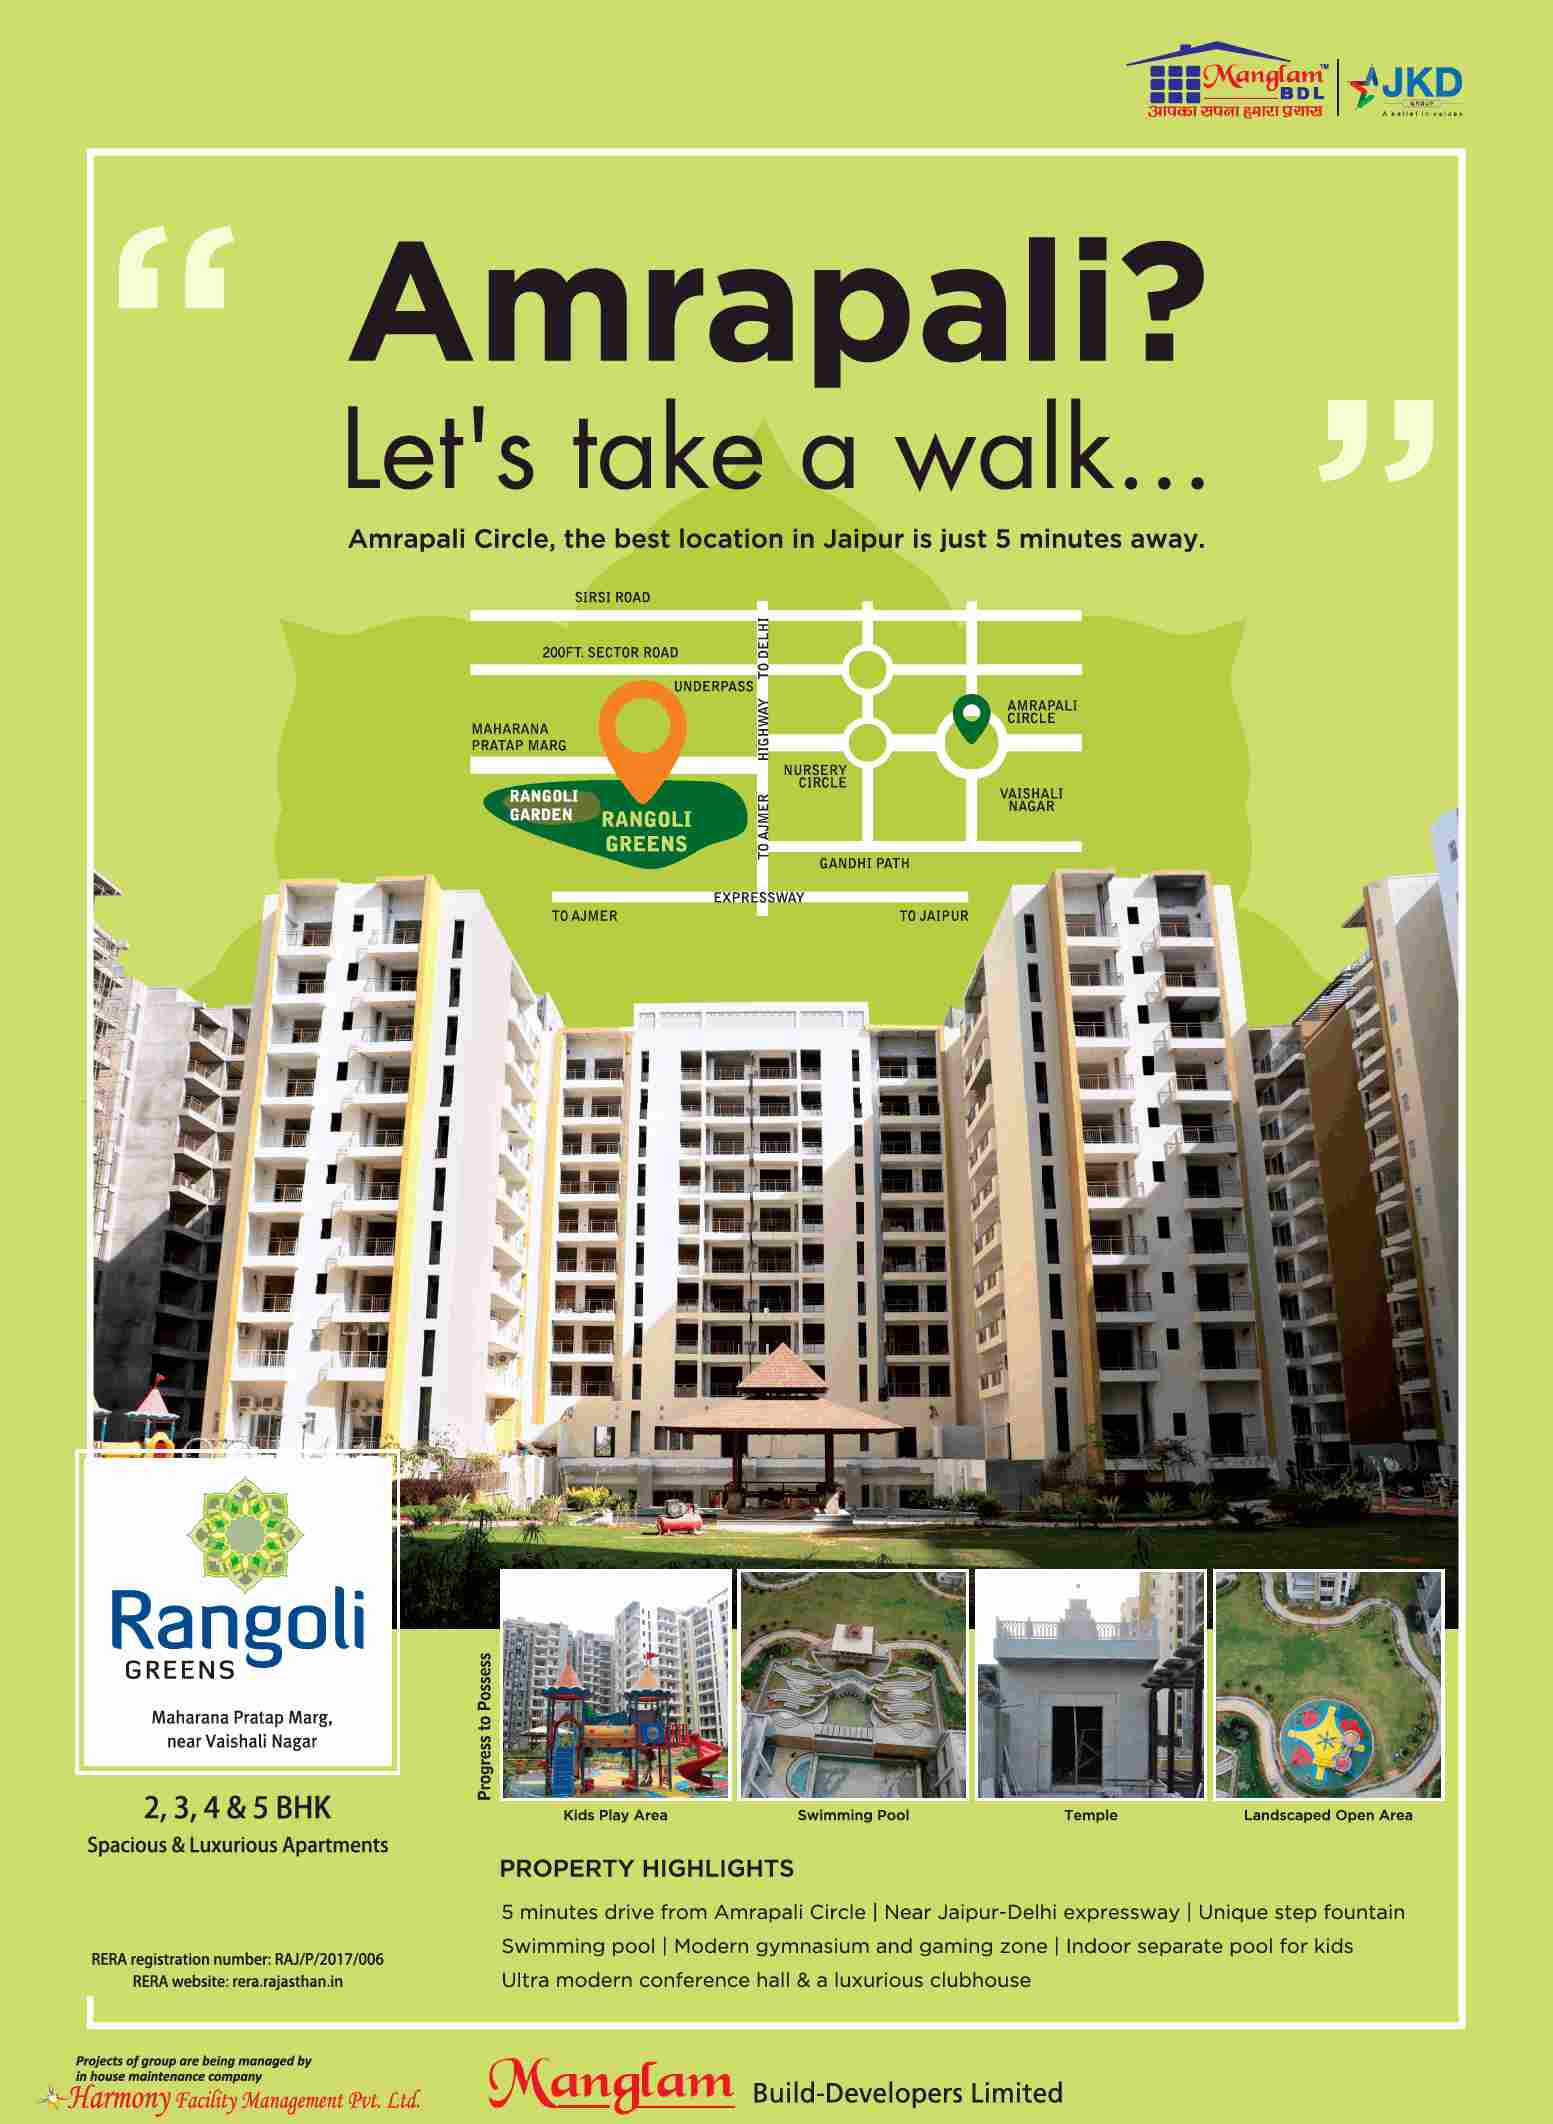 Experience the modern amenities at Manglam Rangoli Greens in Jaipur